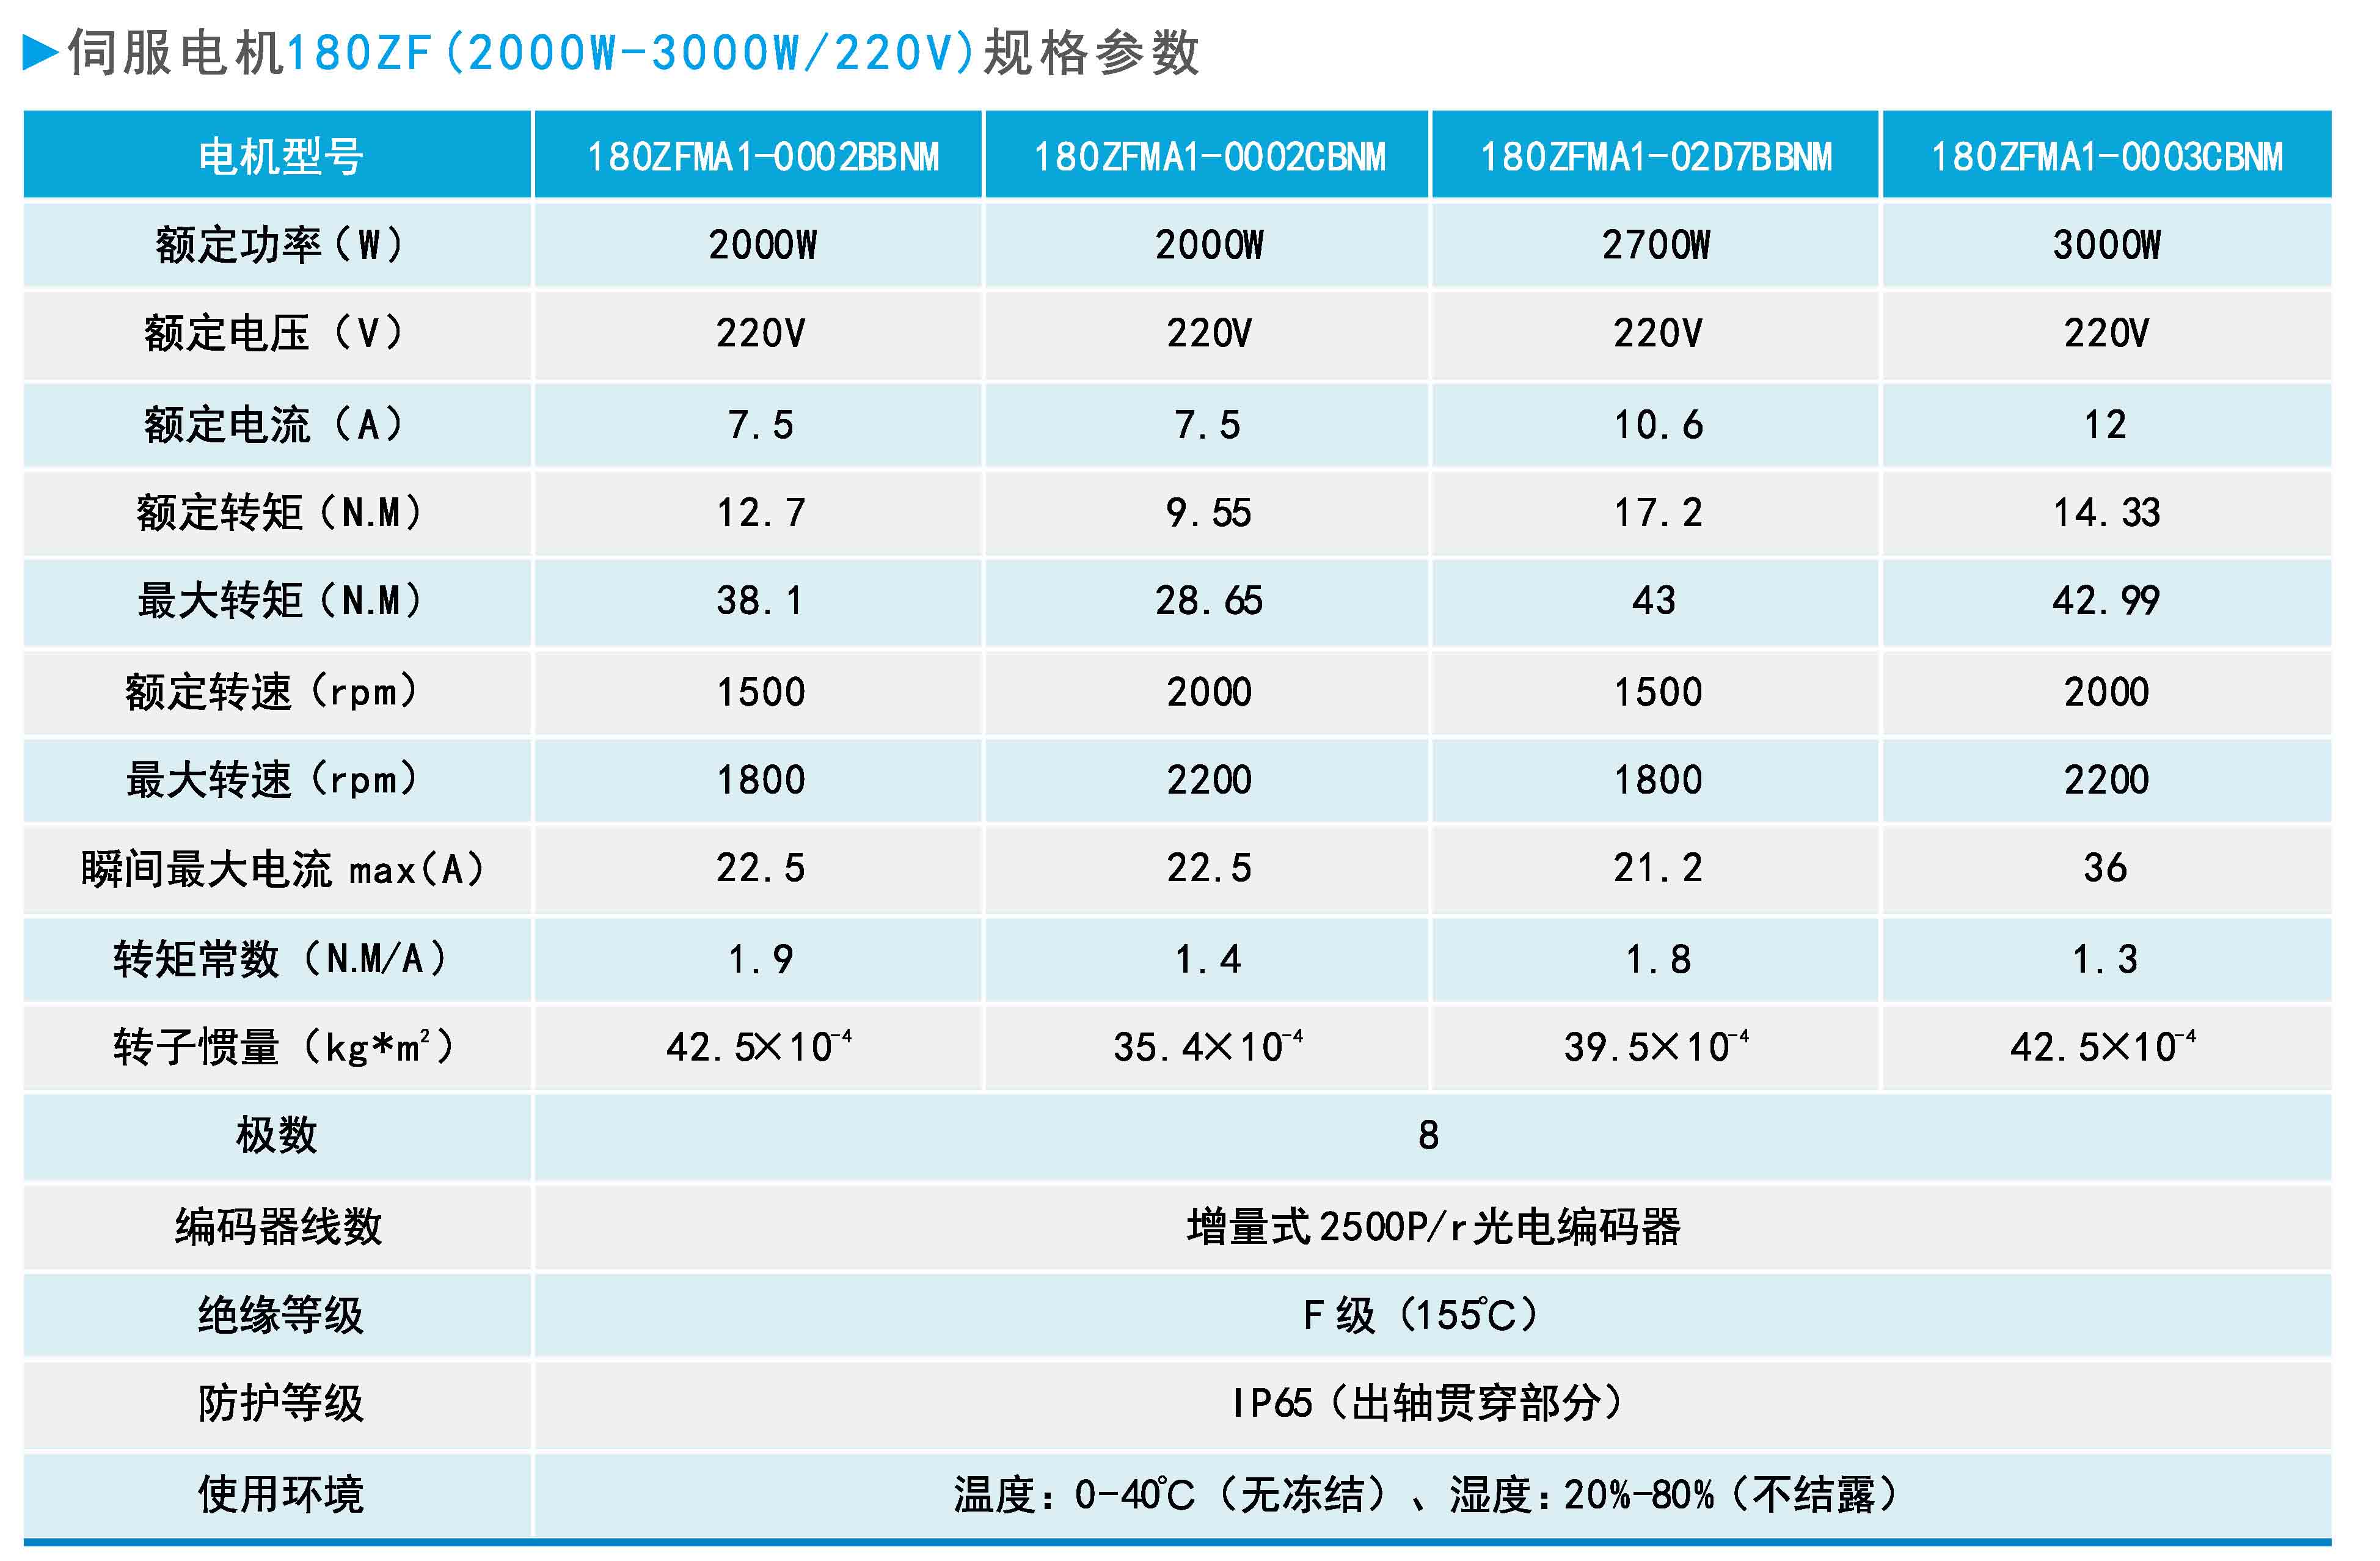 ZF180(2000W-3000W 220V)系列通用型伺服電機規格參數.JPG